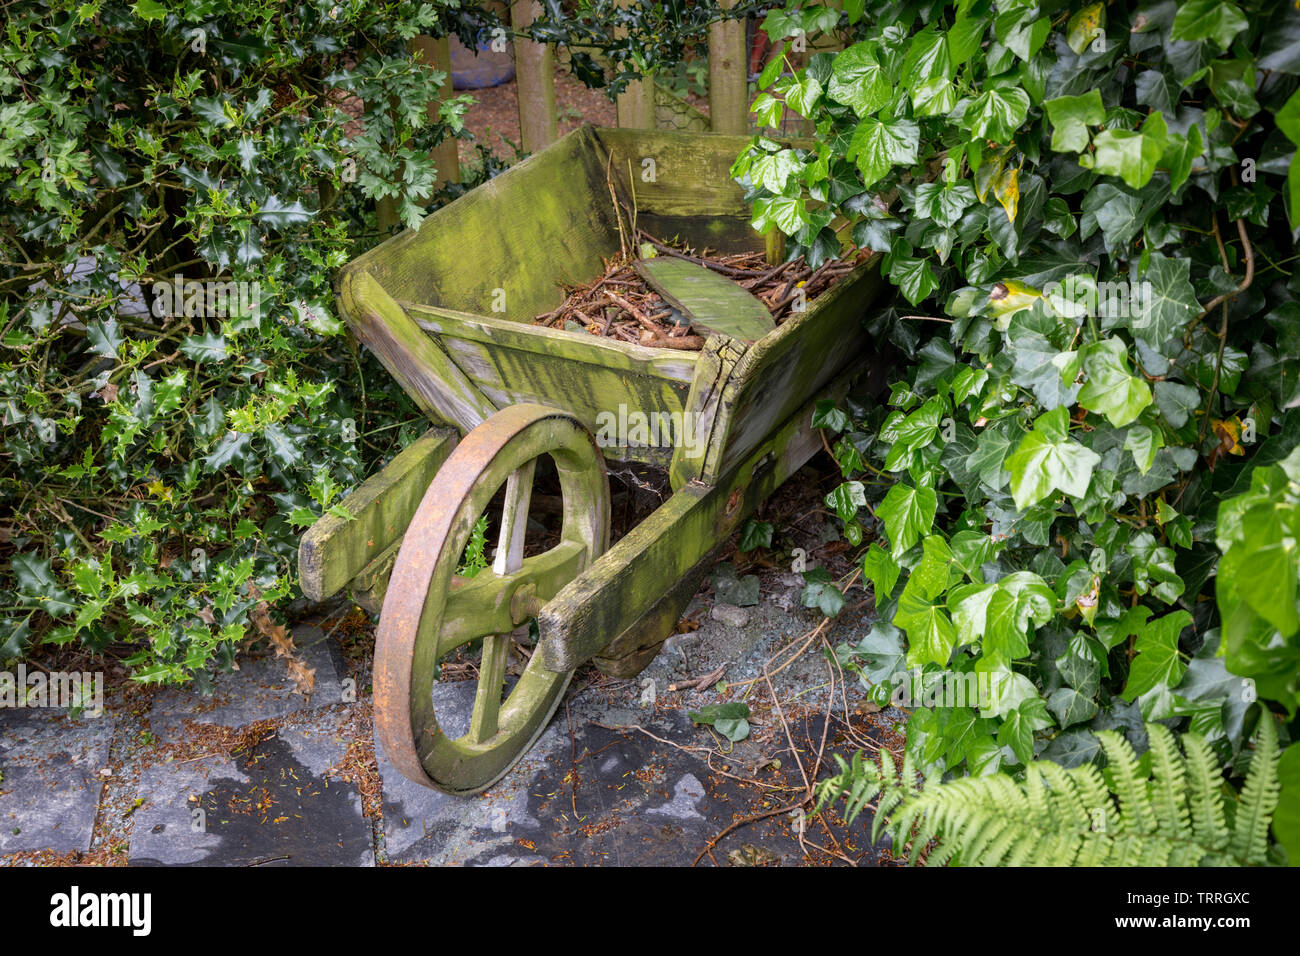 Old wooden wheelbarrow used as a decorative garden feature Stock Photo